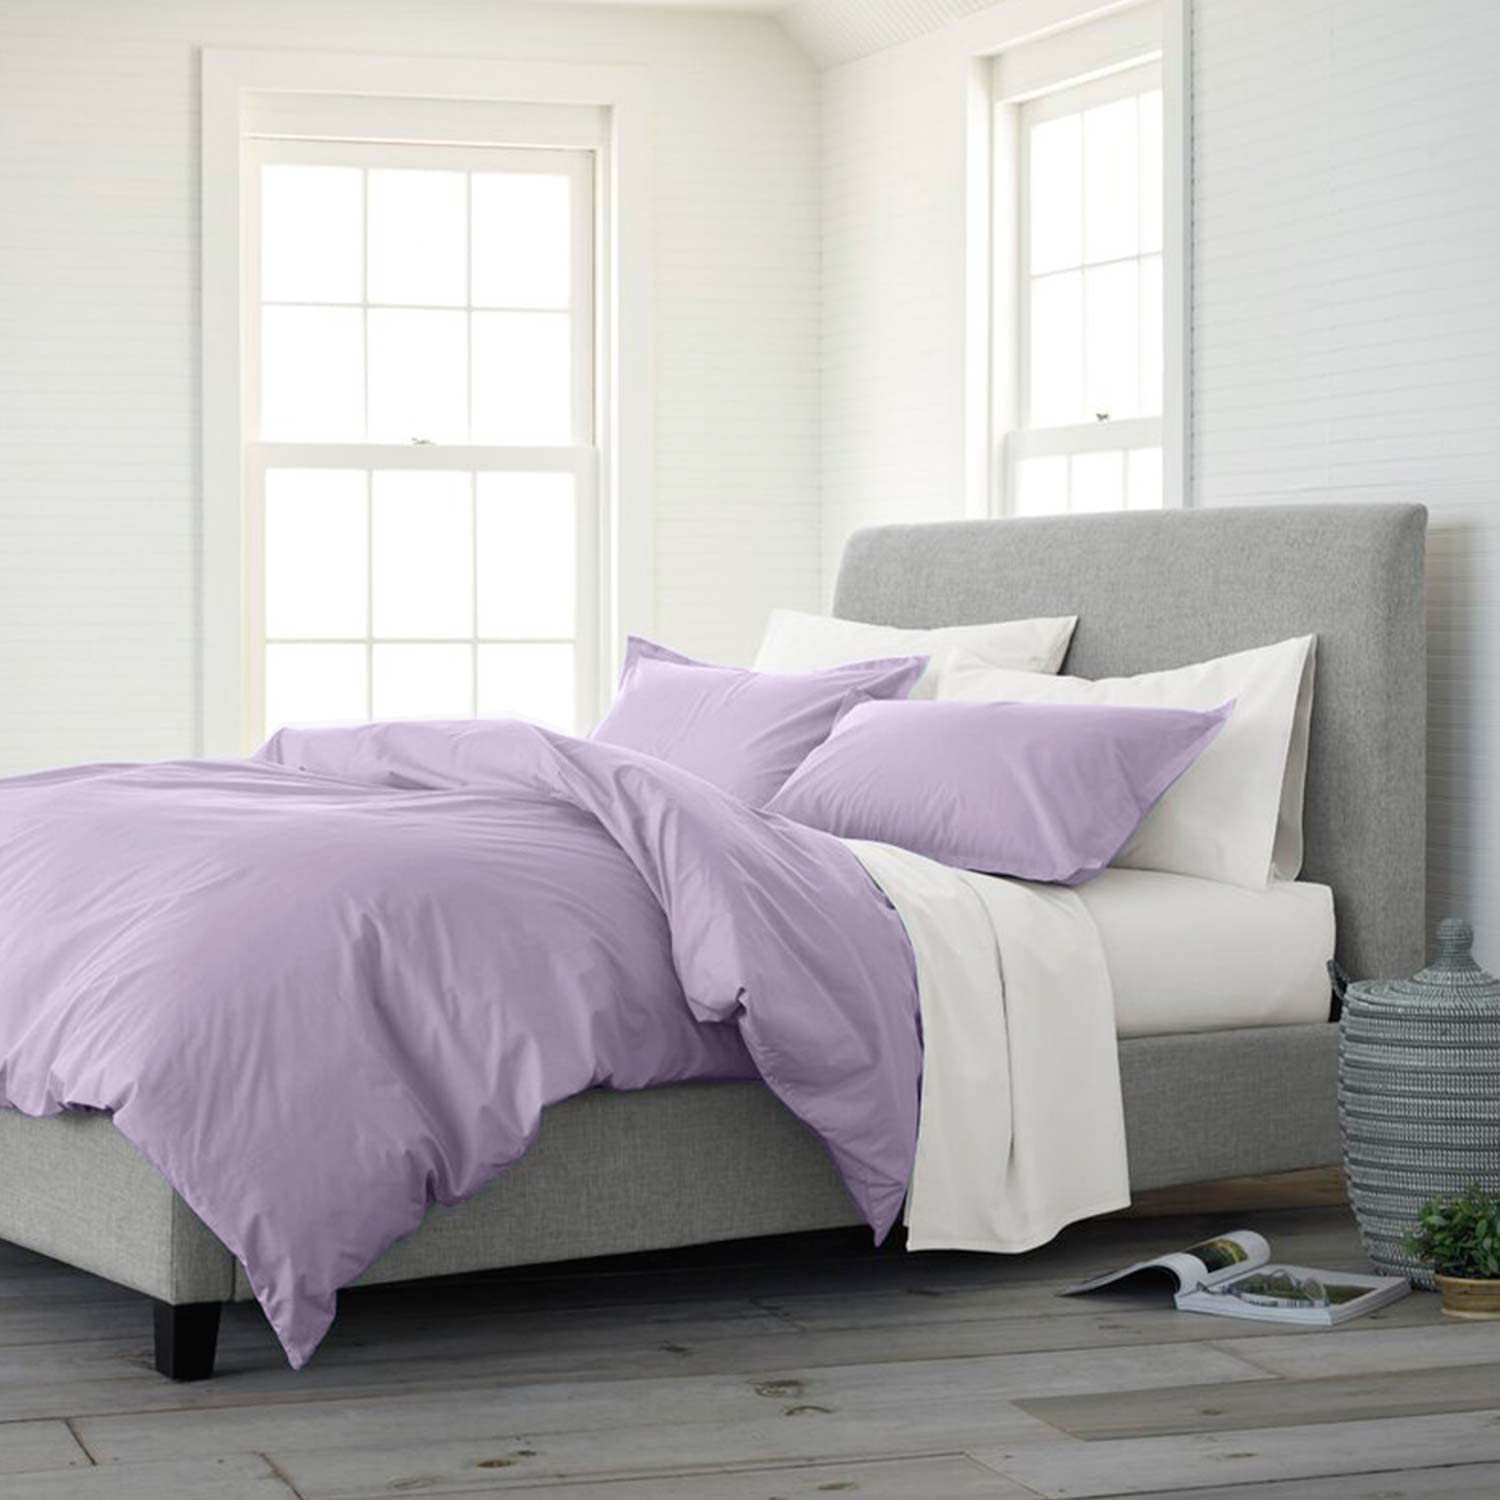 ETDIFFE Grey Comforter Set Twin/Twin XL Size, 2pc Aesthetic Modern Gray  Bedding Set - Soft & Lightweight All Season Extra Long Microfiber Down